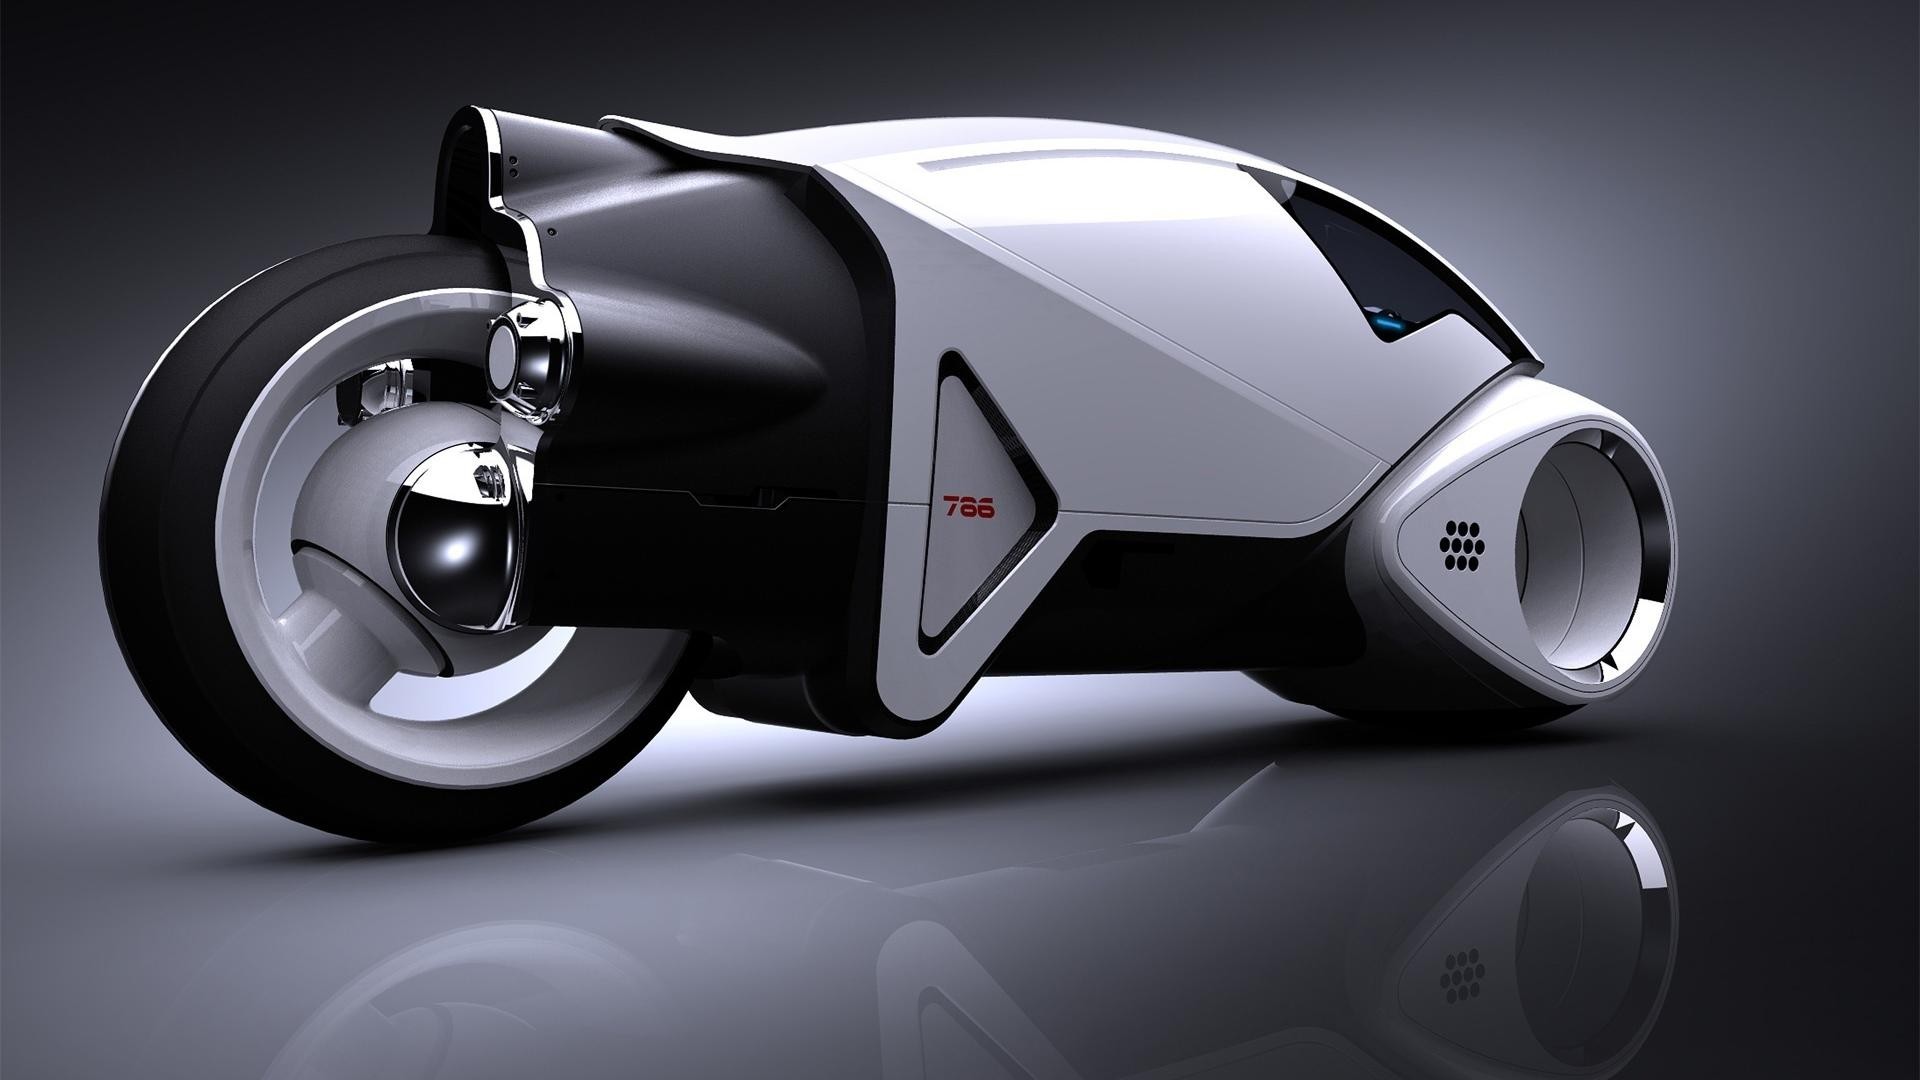 sport bike car wheel vehicle transportation system drive isolated fast chrome power